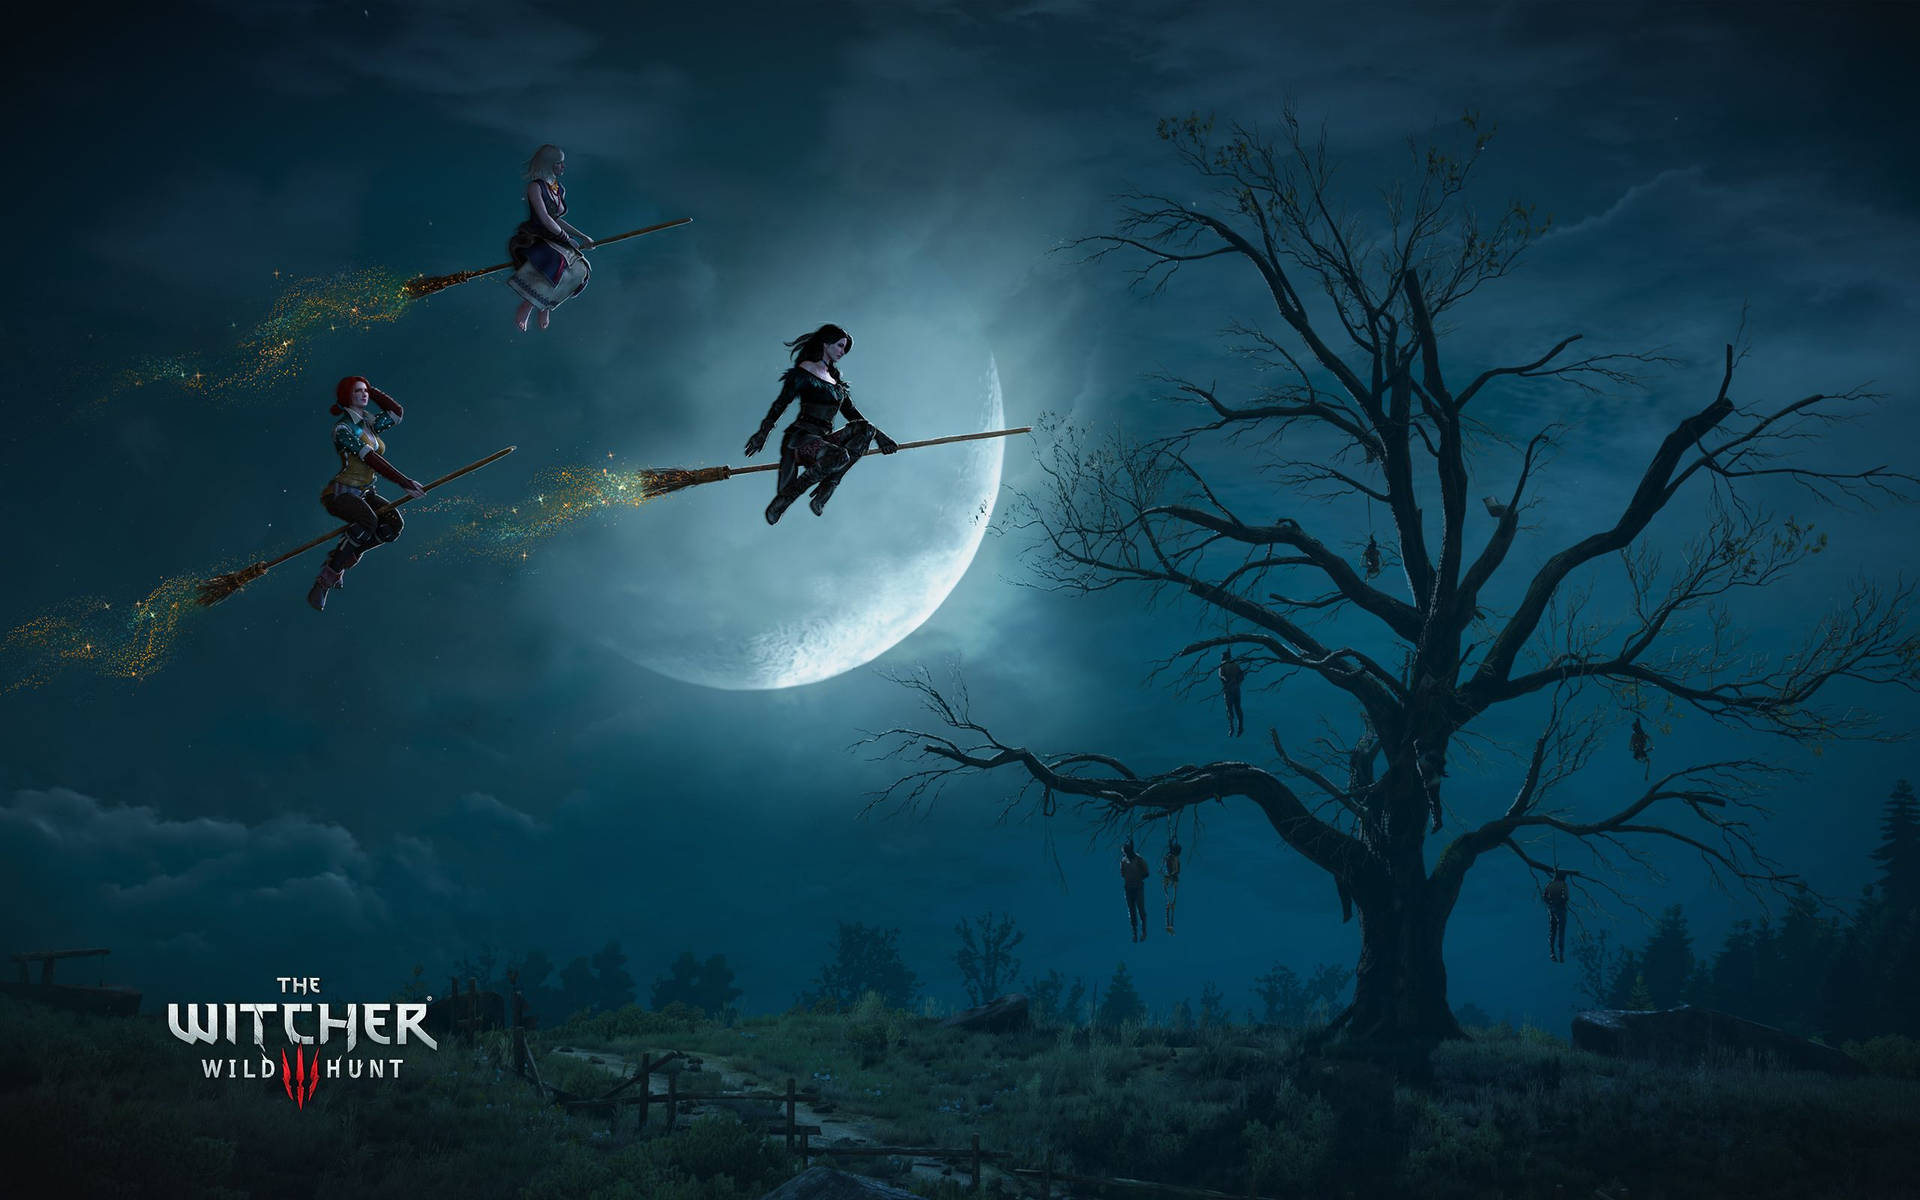 Witcher 3 - Witcher 3 Wallpaper Background